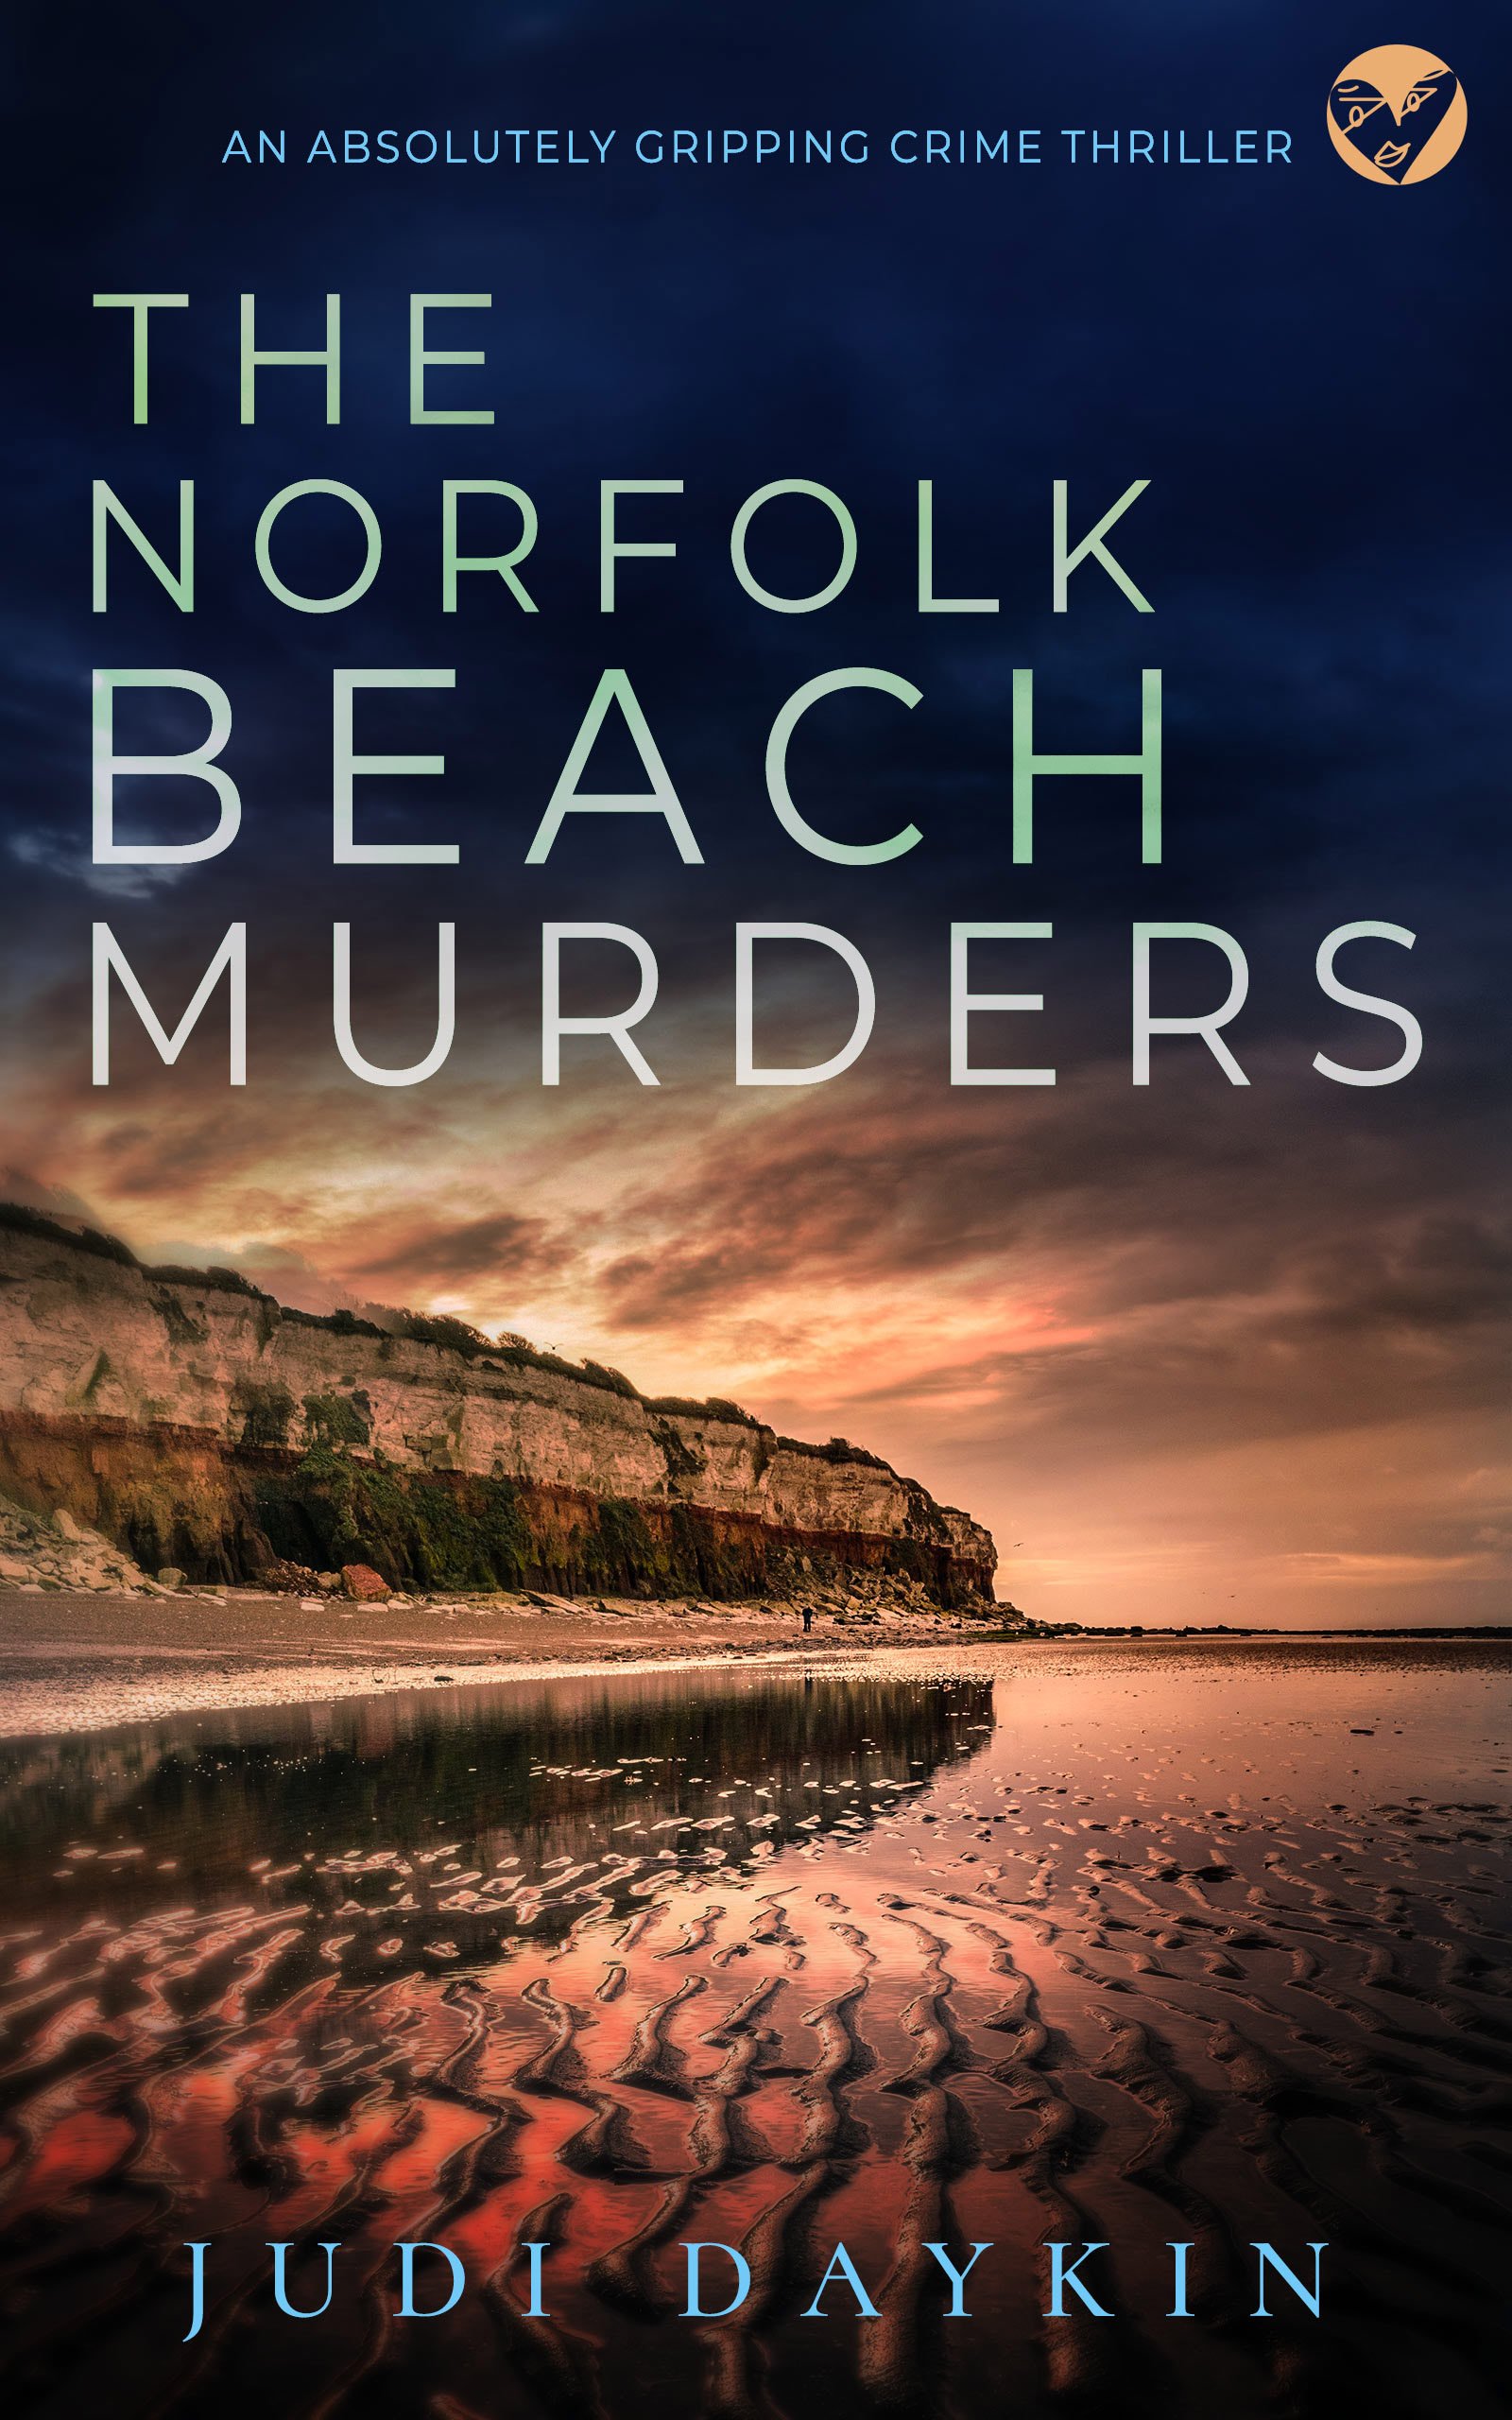 THE NORFOLK BEACH MURDERS 639k publish cover.jpg